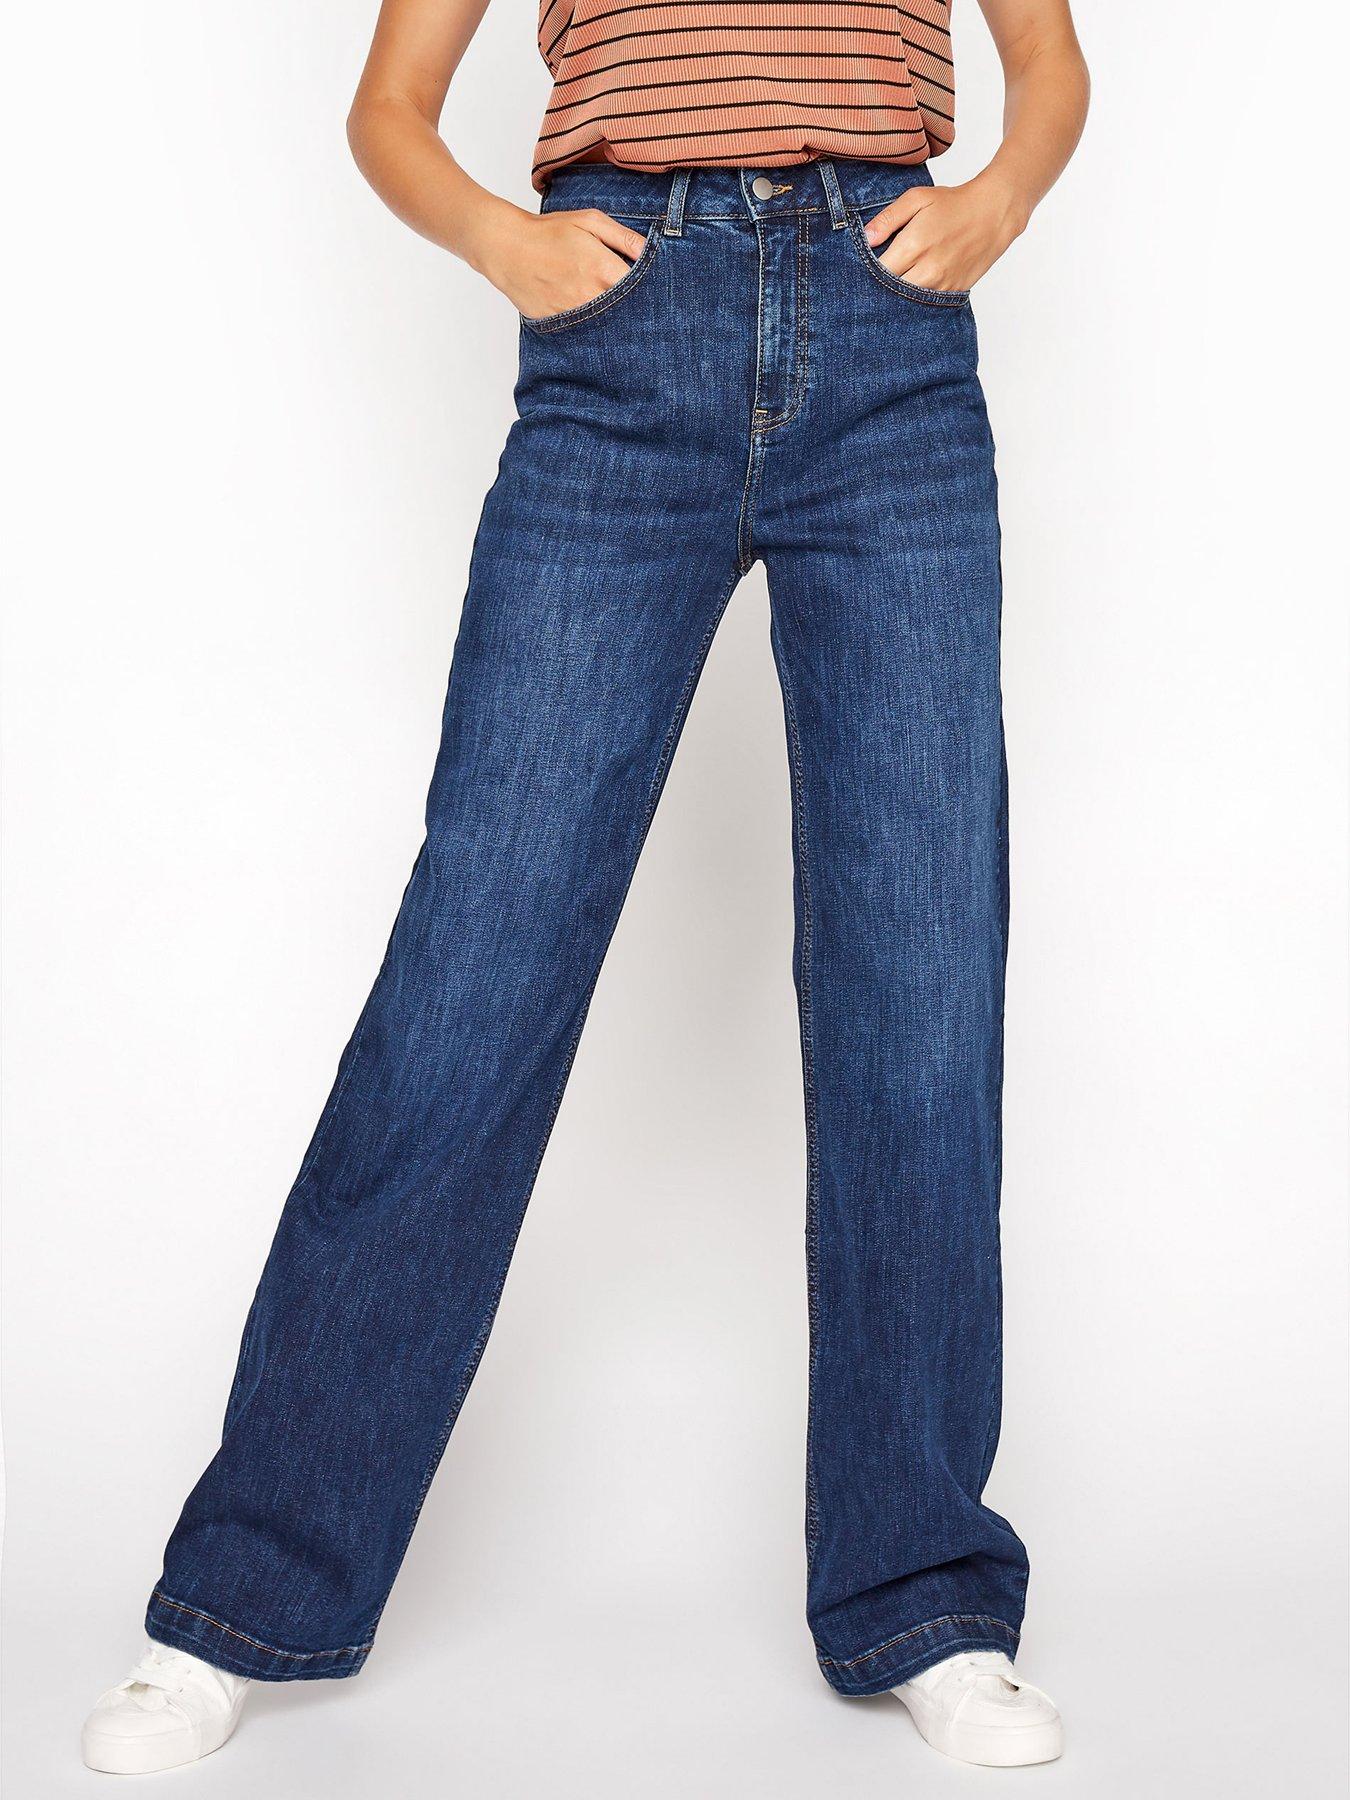  Long Tall Sally Wide Leg Jeans - Dark Blue